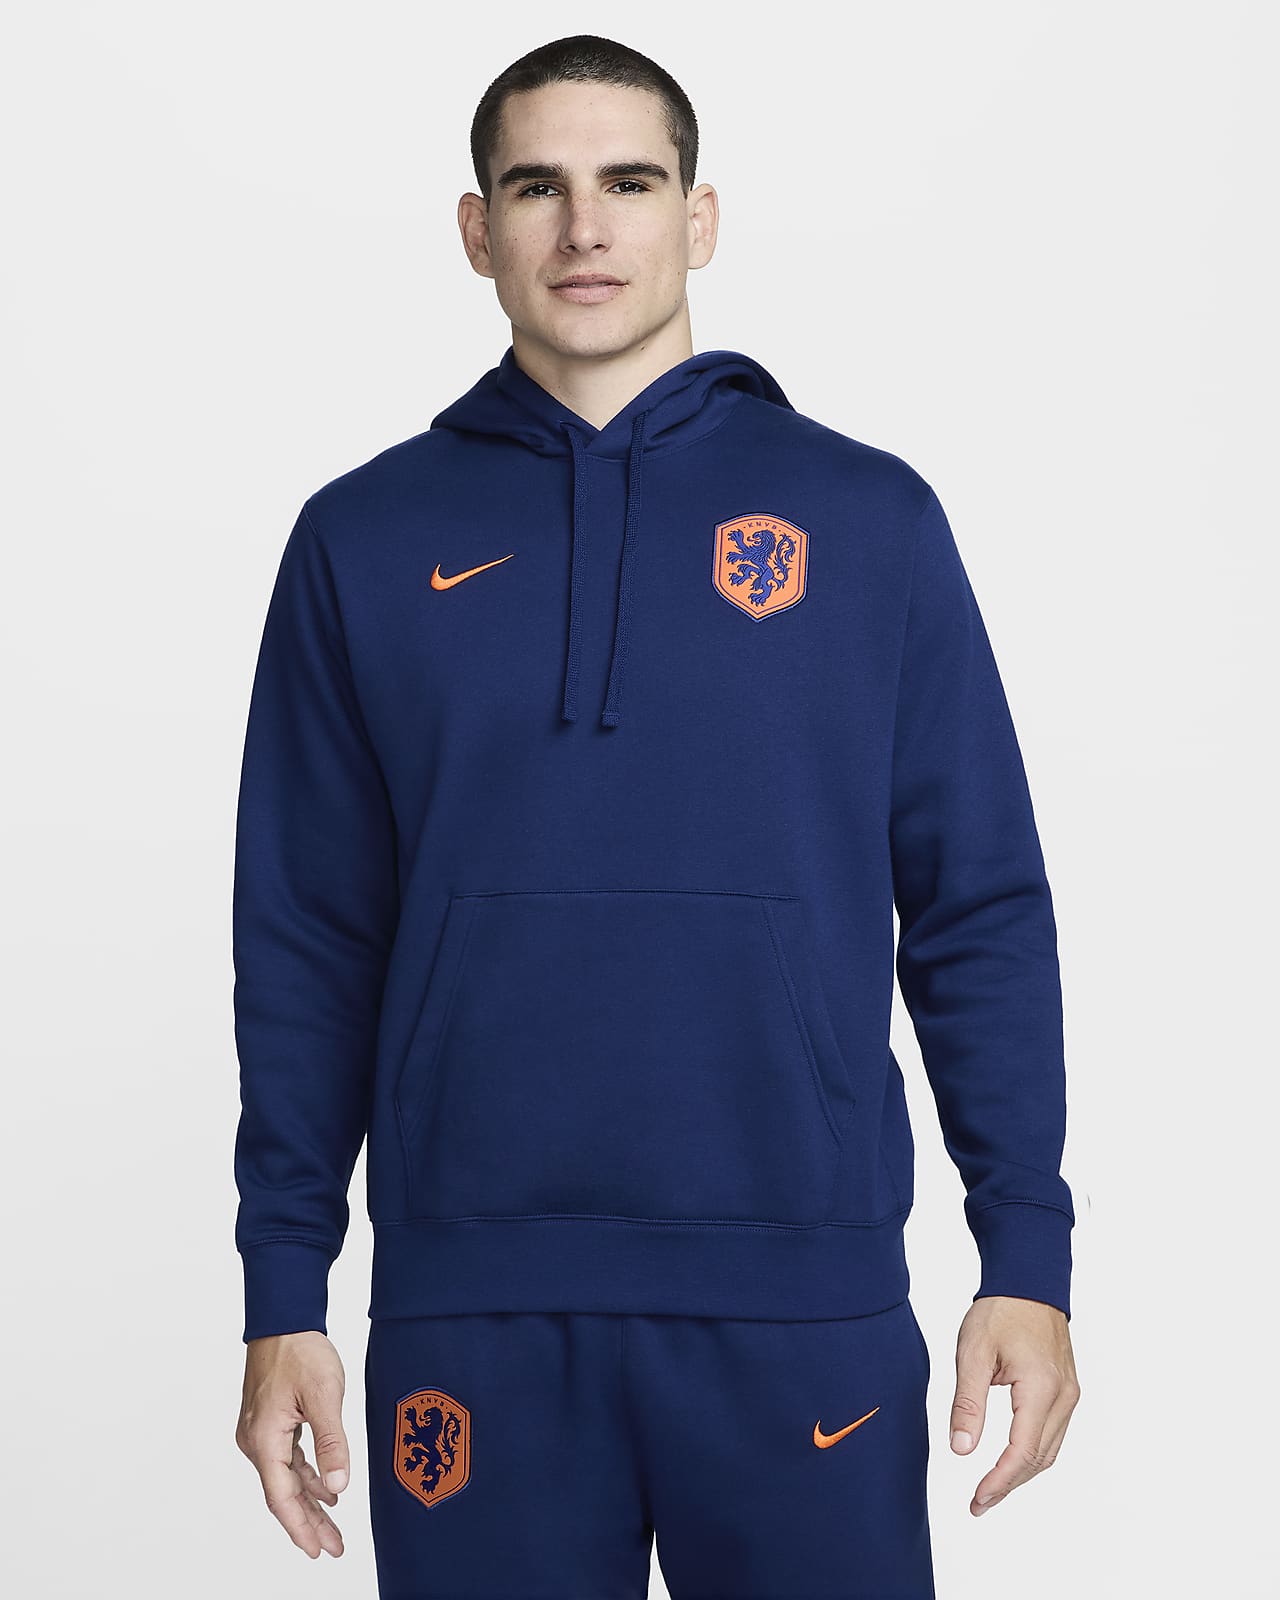 Hollandia Club Nike Soccer kapucnis, belebújós férfipulóver